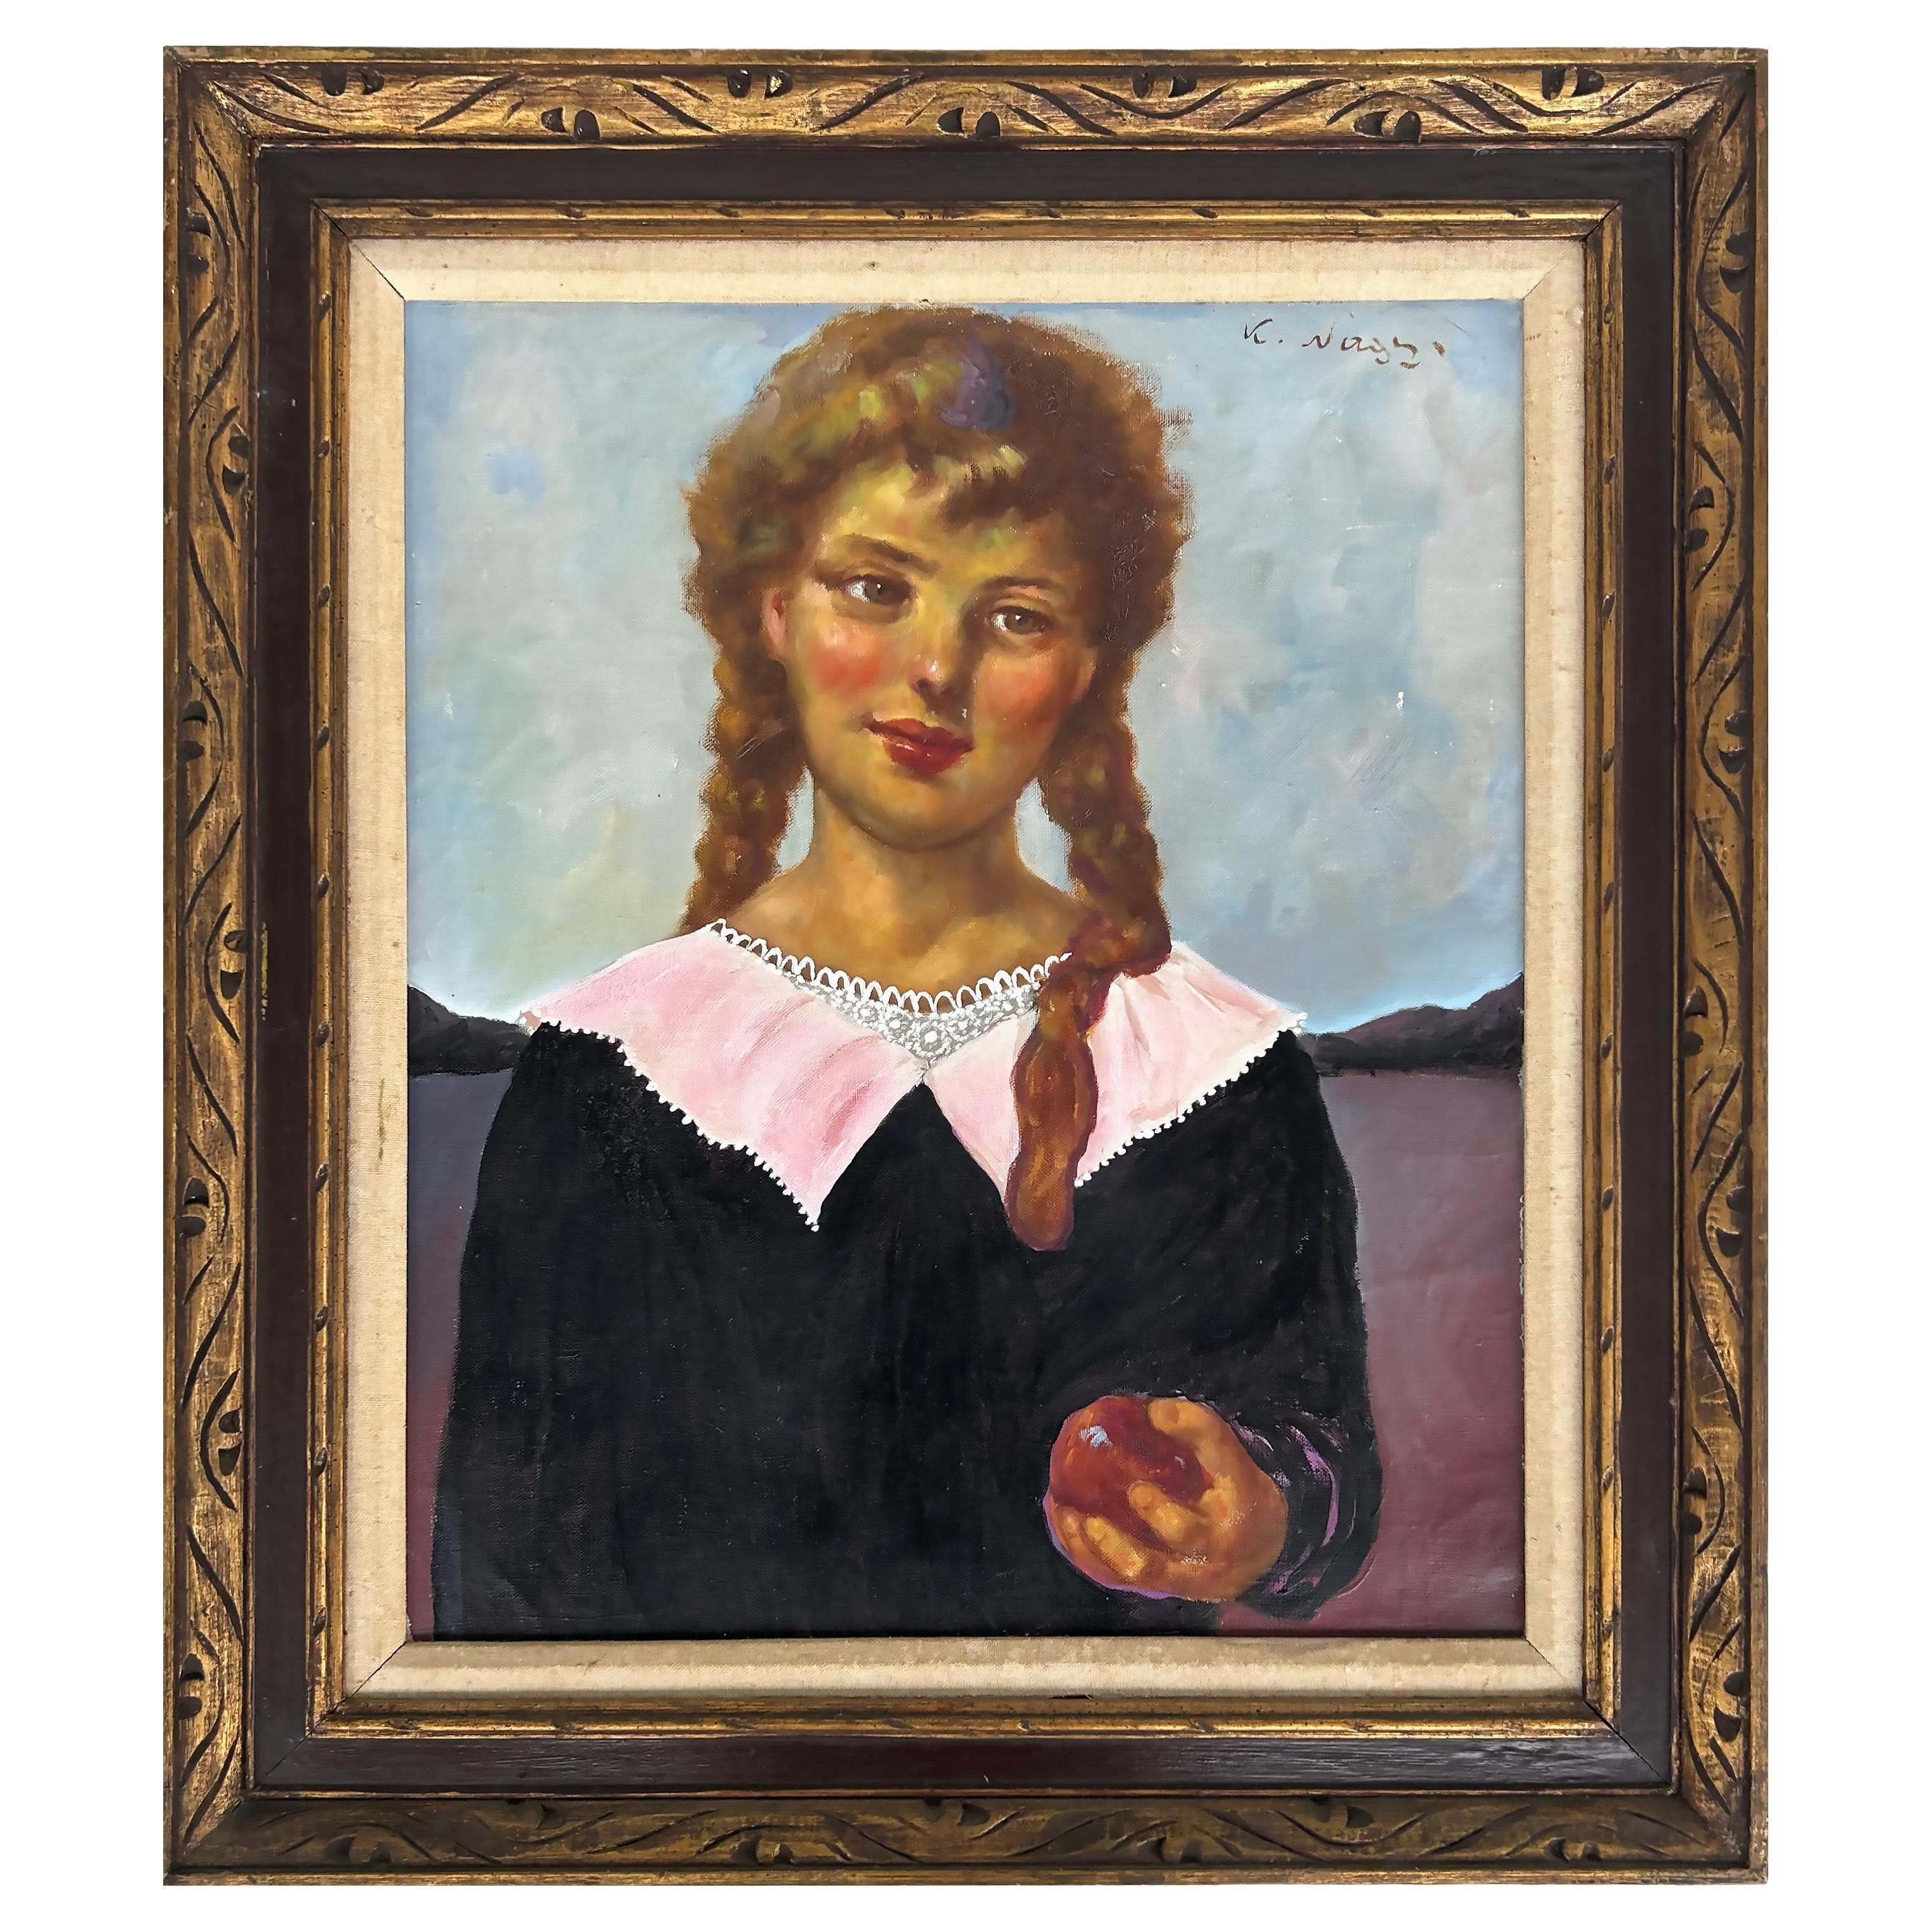  K. Naggi VIntage Illustrative Oil Painting, Girl with Pigtails  For Sale